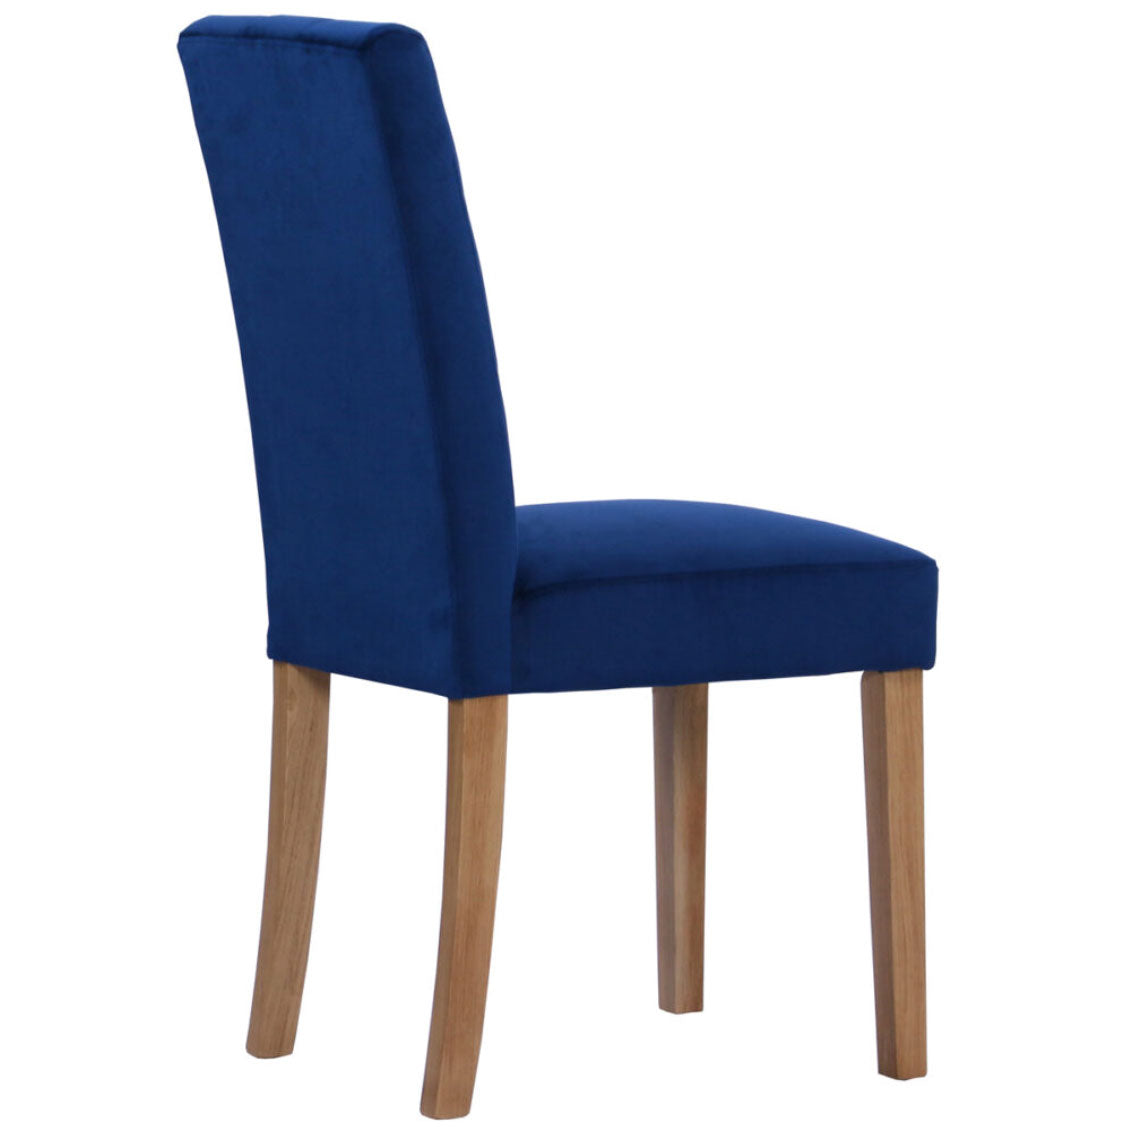 Manor Collection Ashbury Velvet Chair